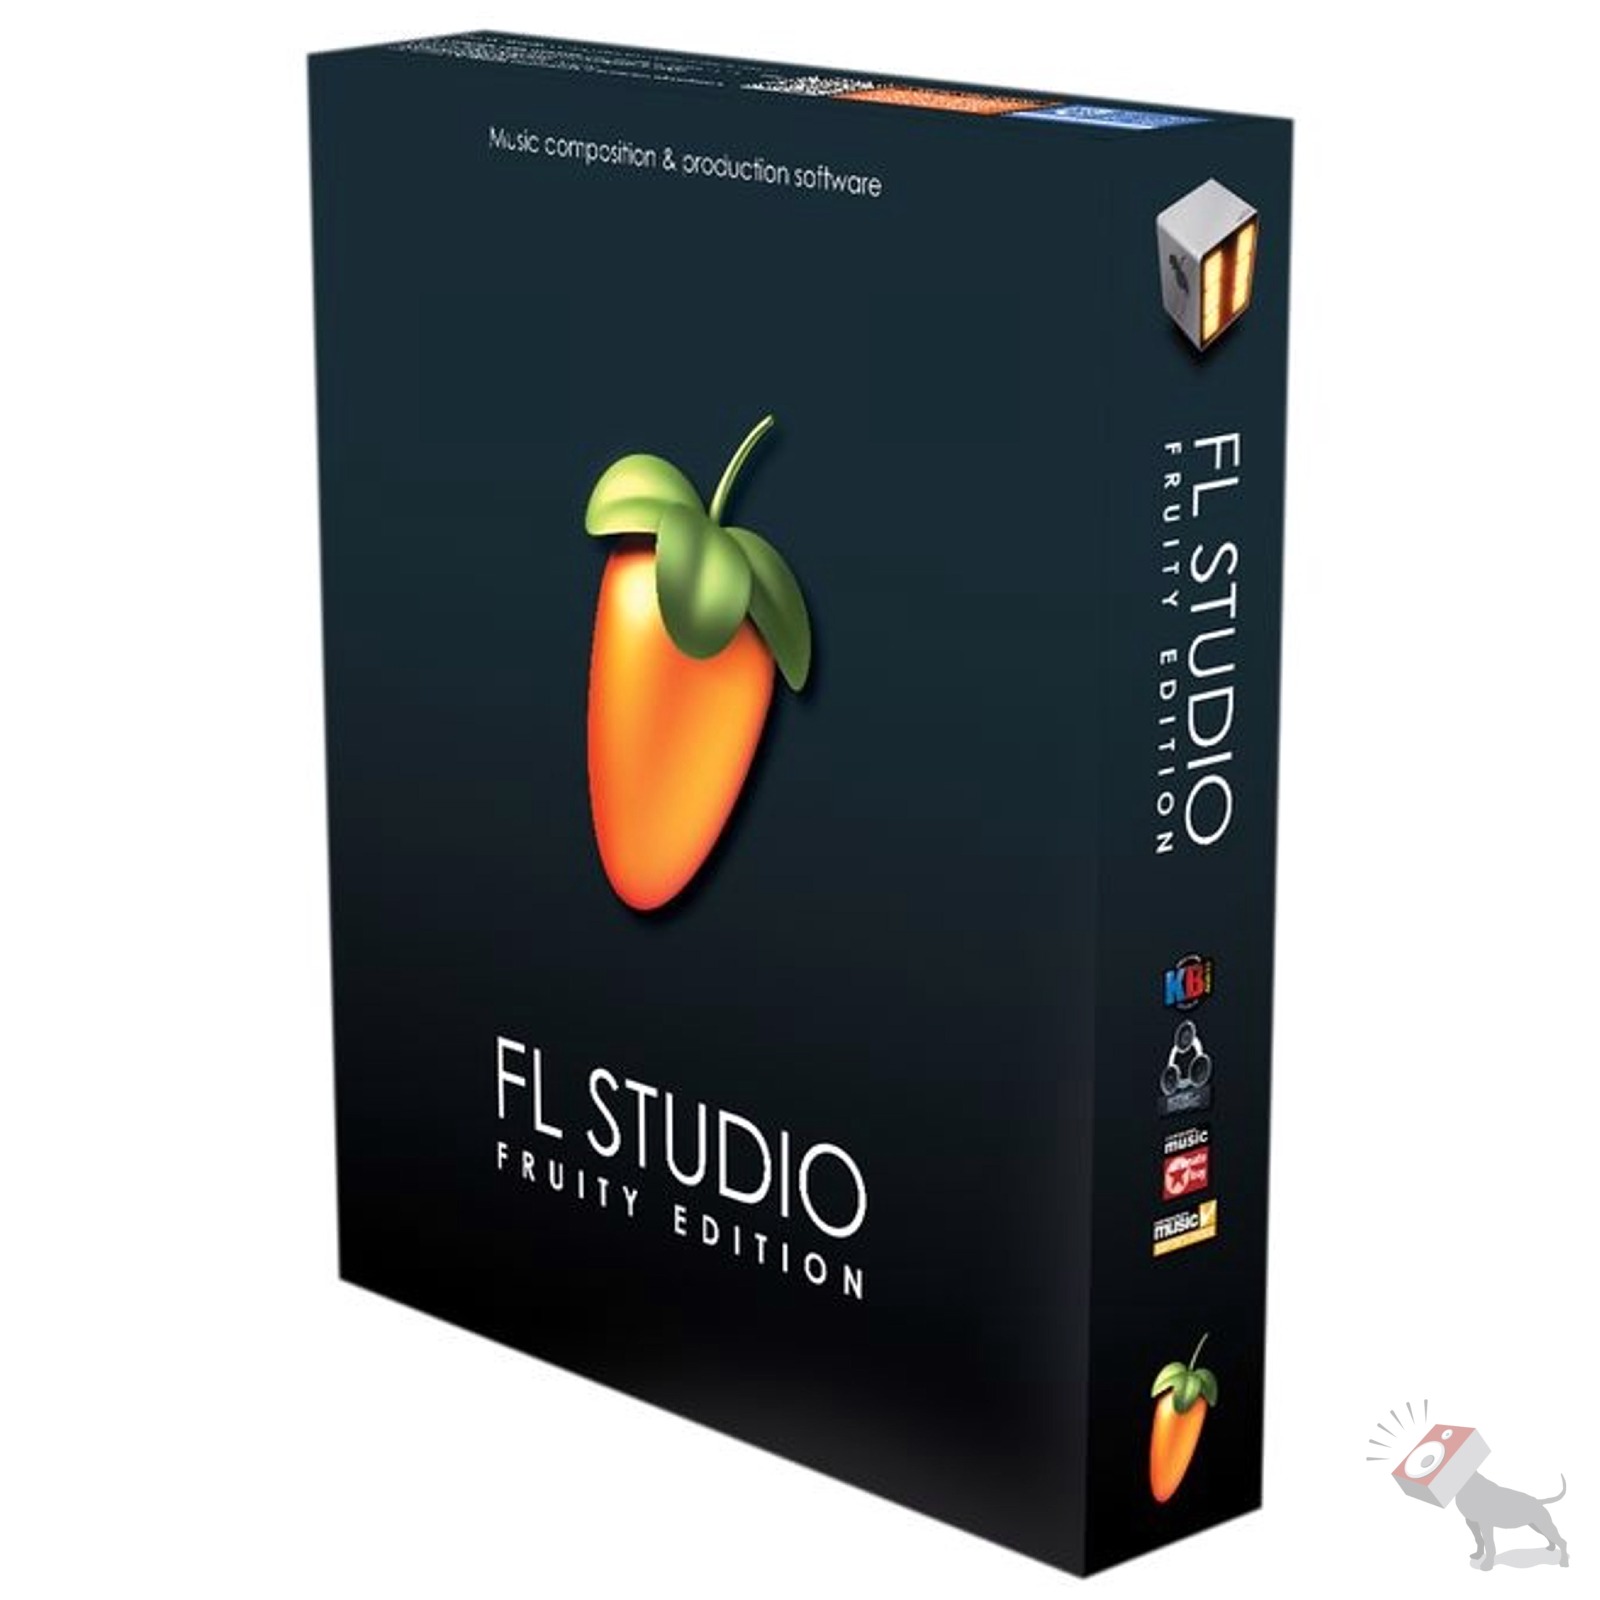 fl studio 12.5 regkey free download